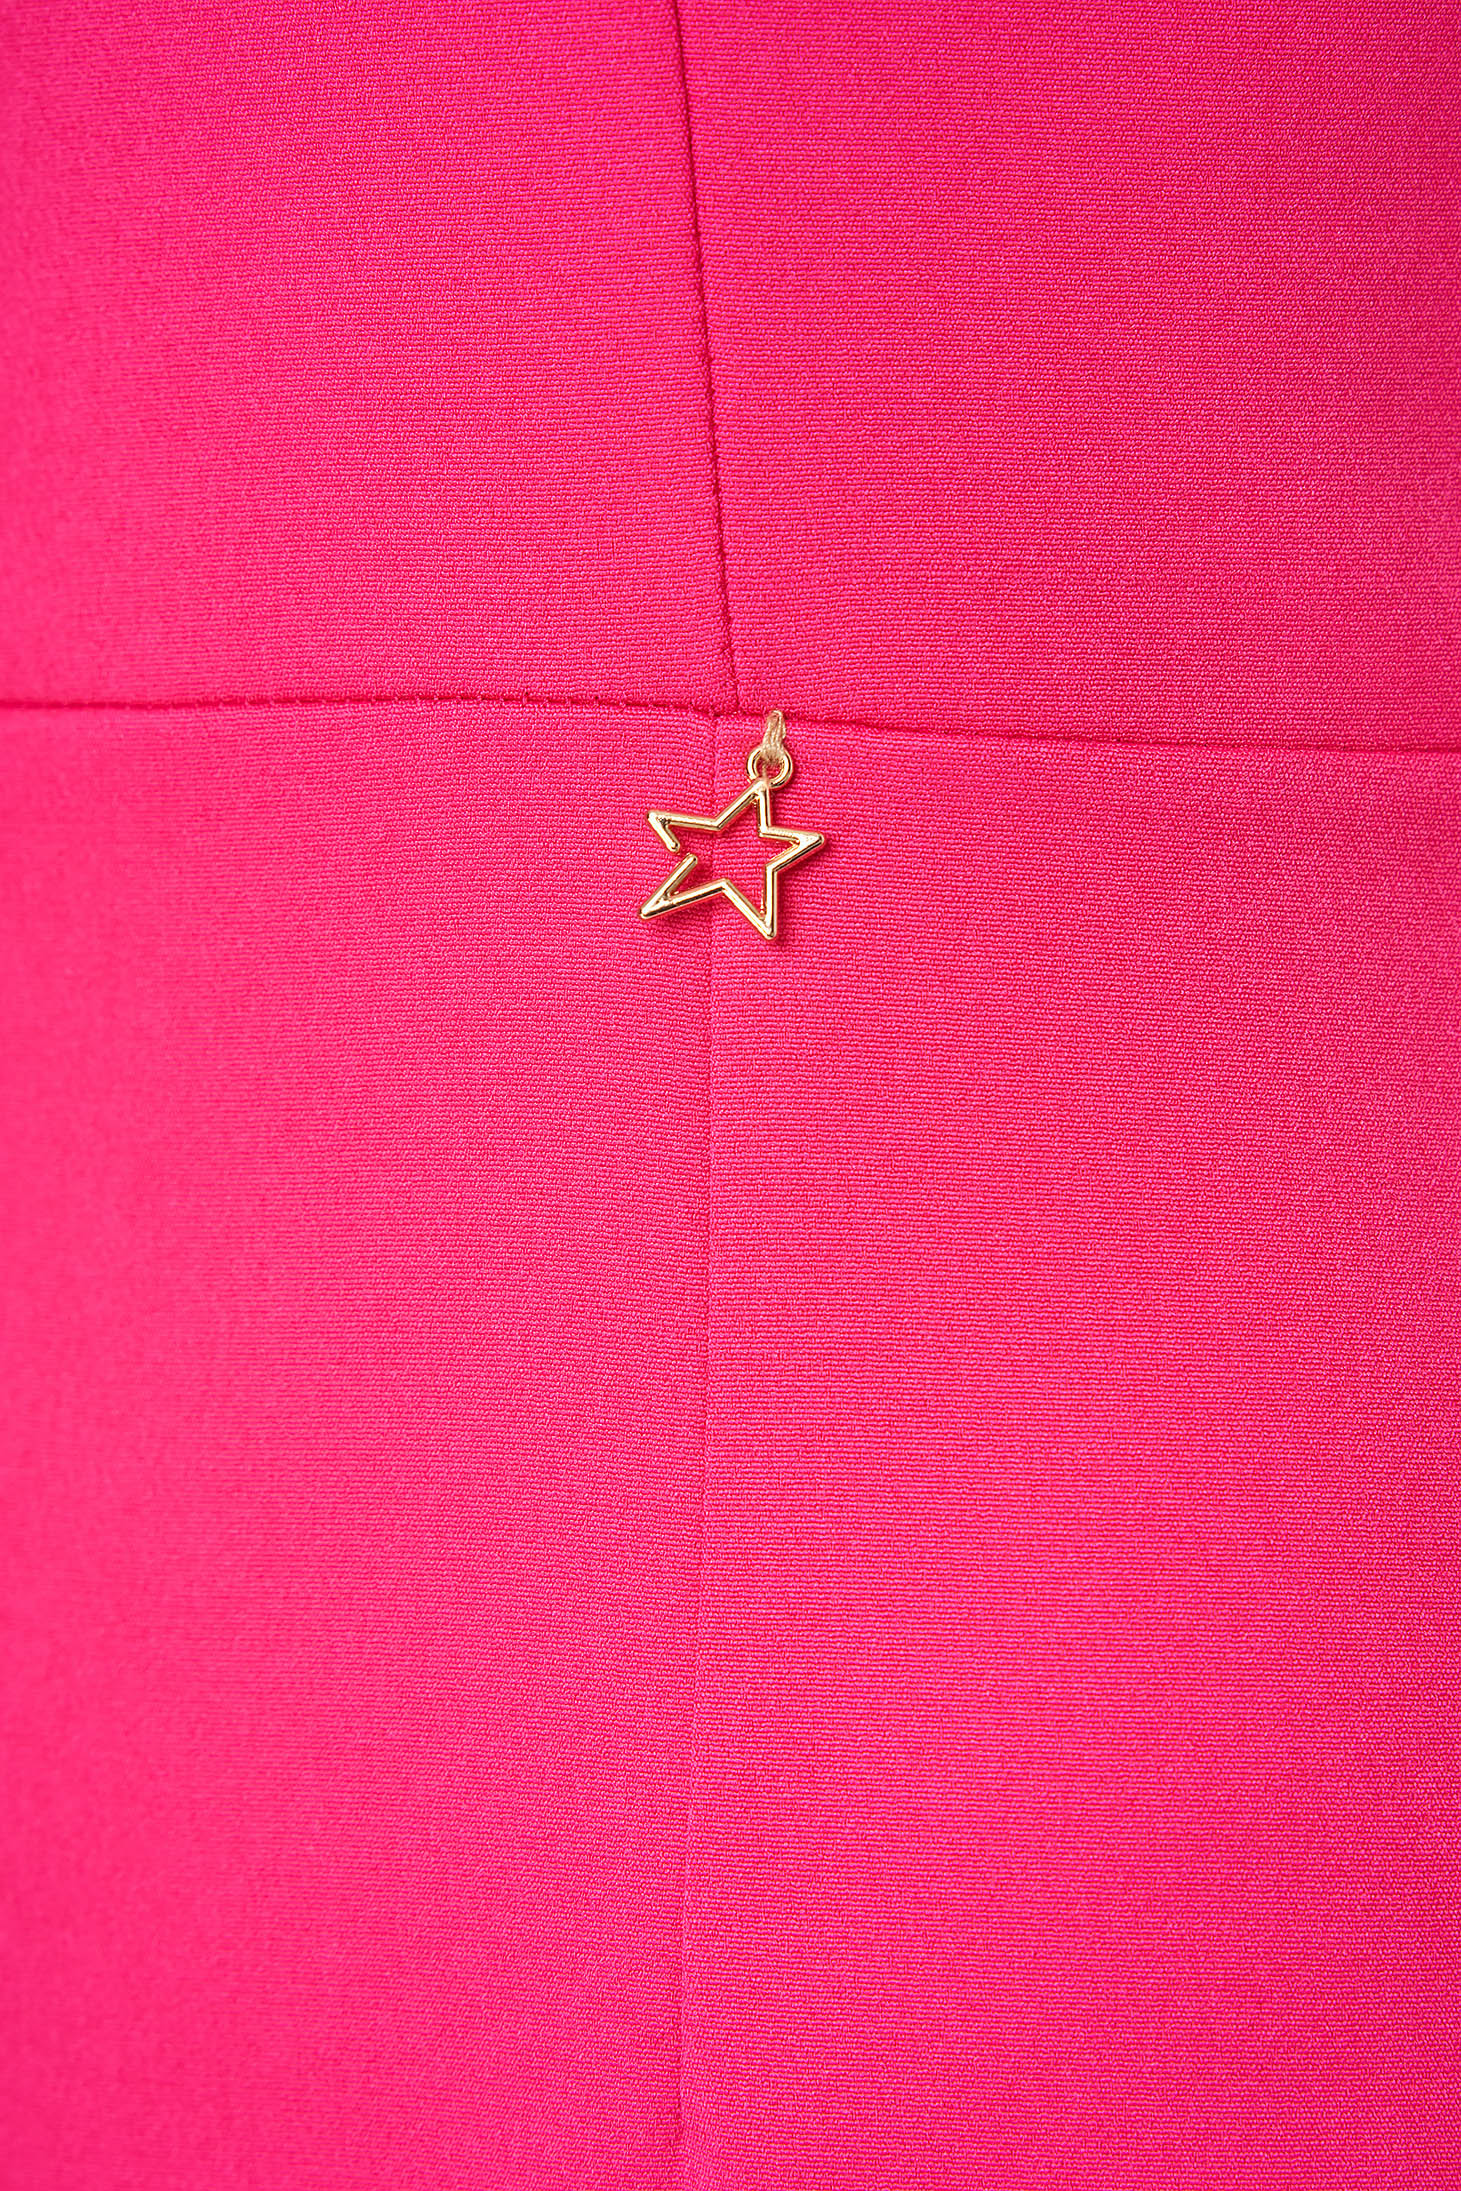 Rochie din stofa usor elastica fuchsia tip creion fara maneci - StarShinerS 6 - StarShinerS.ro